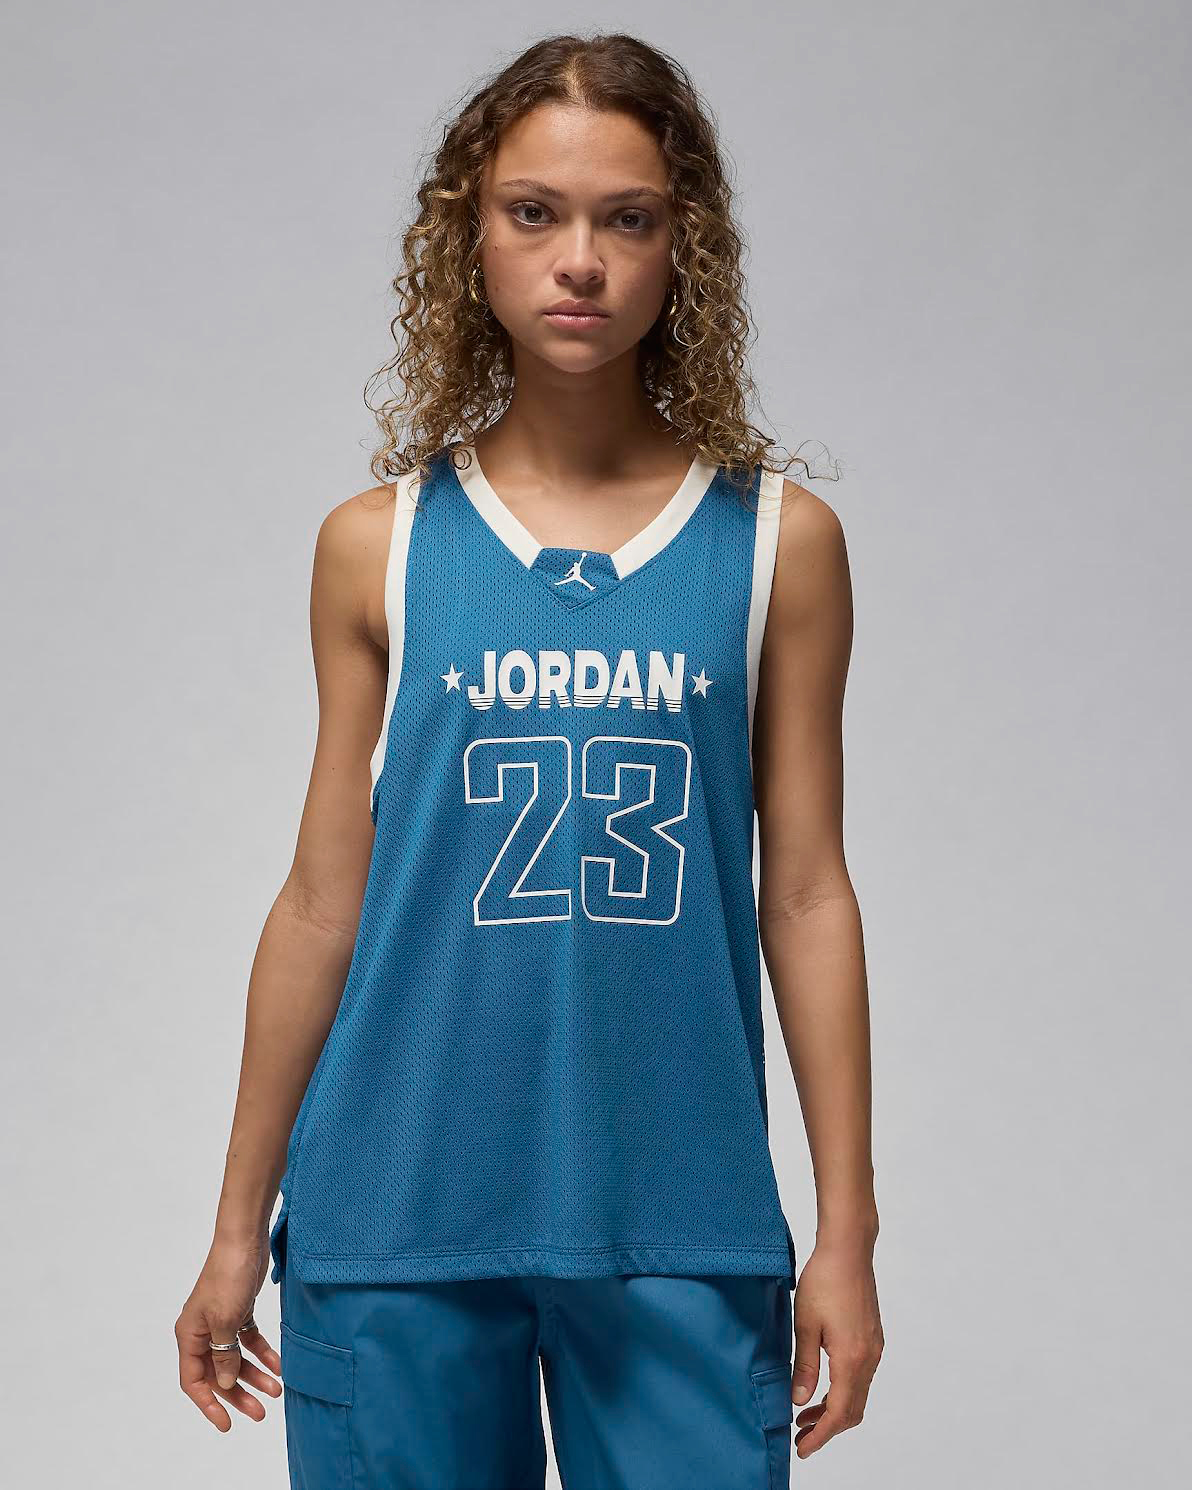 Jordan-Womens-23-Jersey-Tank-Top-Industrial-Blue